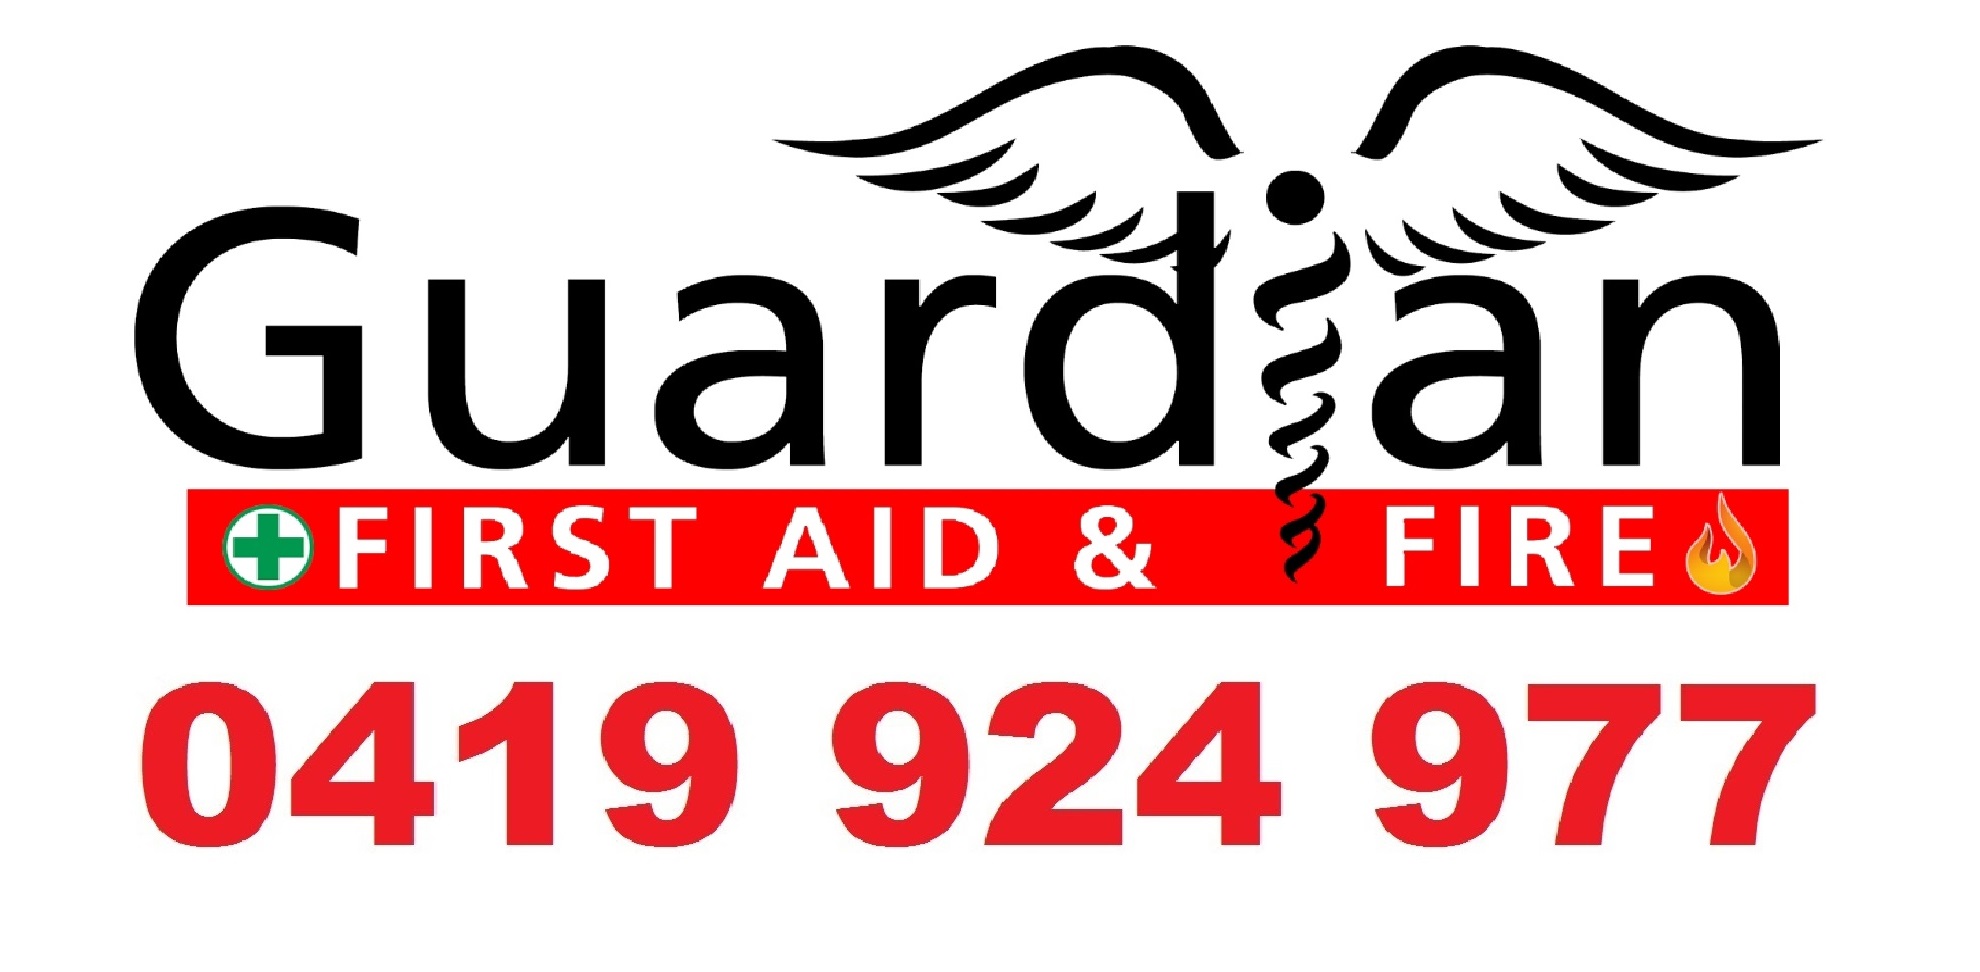 Guardian First Aid & Fire Safety, servicing & restocking equipment in Busselton, Dunsborough, Yallingup, Margaret River, Bunbury, Mandurah